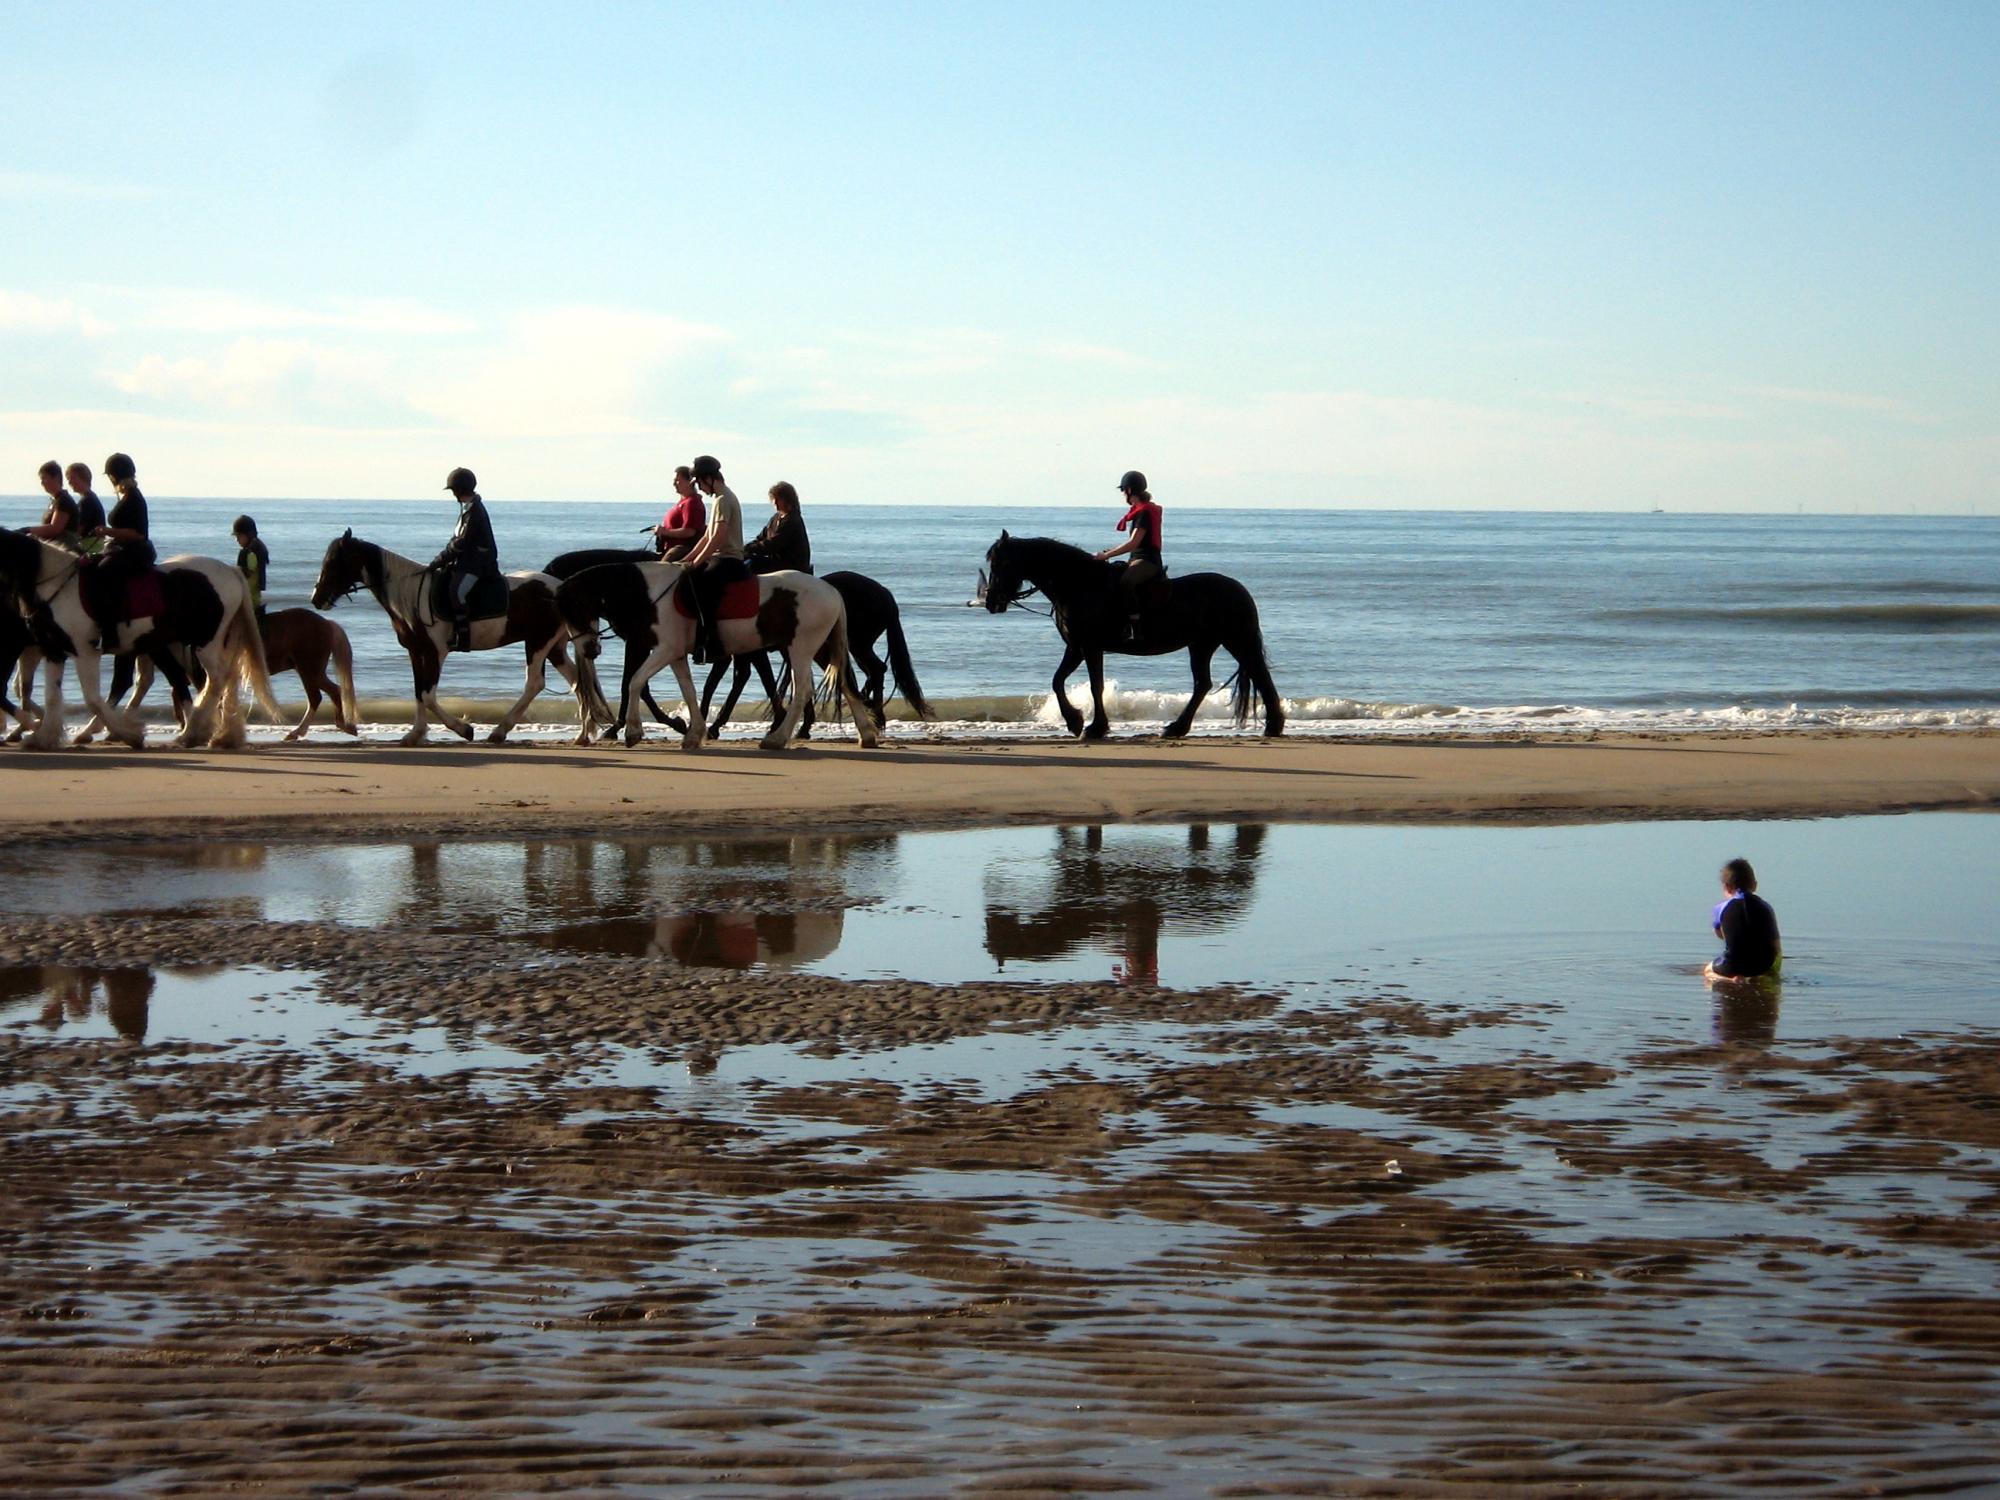 Belgian Coast - Horses On The Beach #2